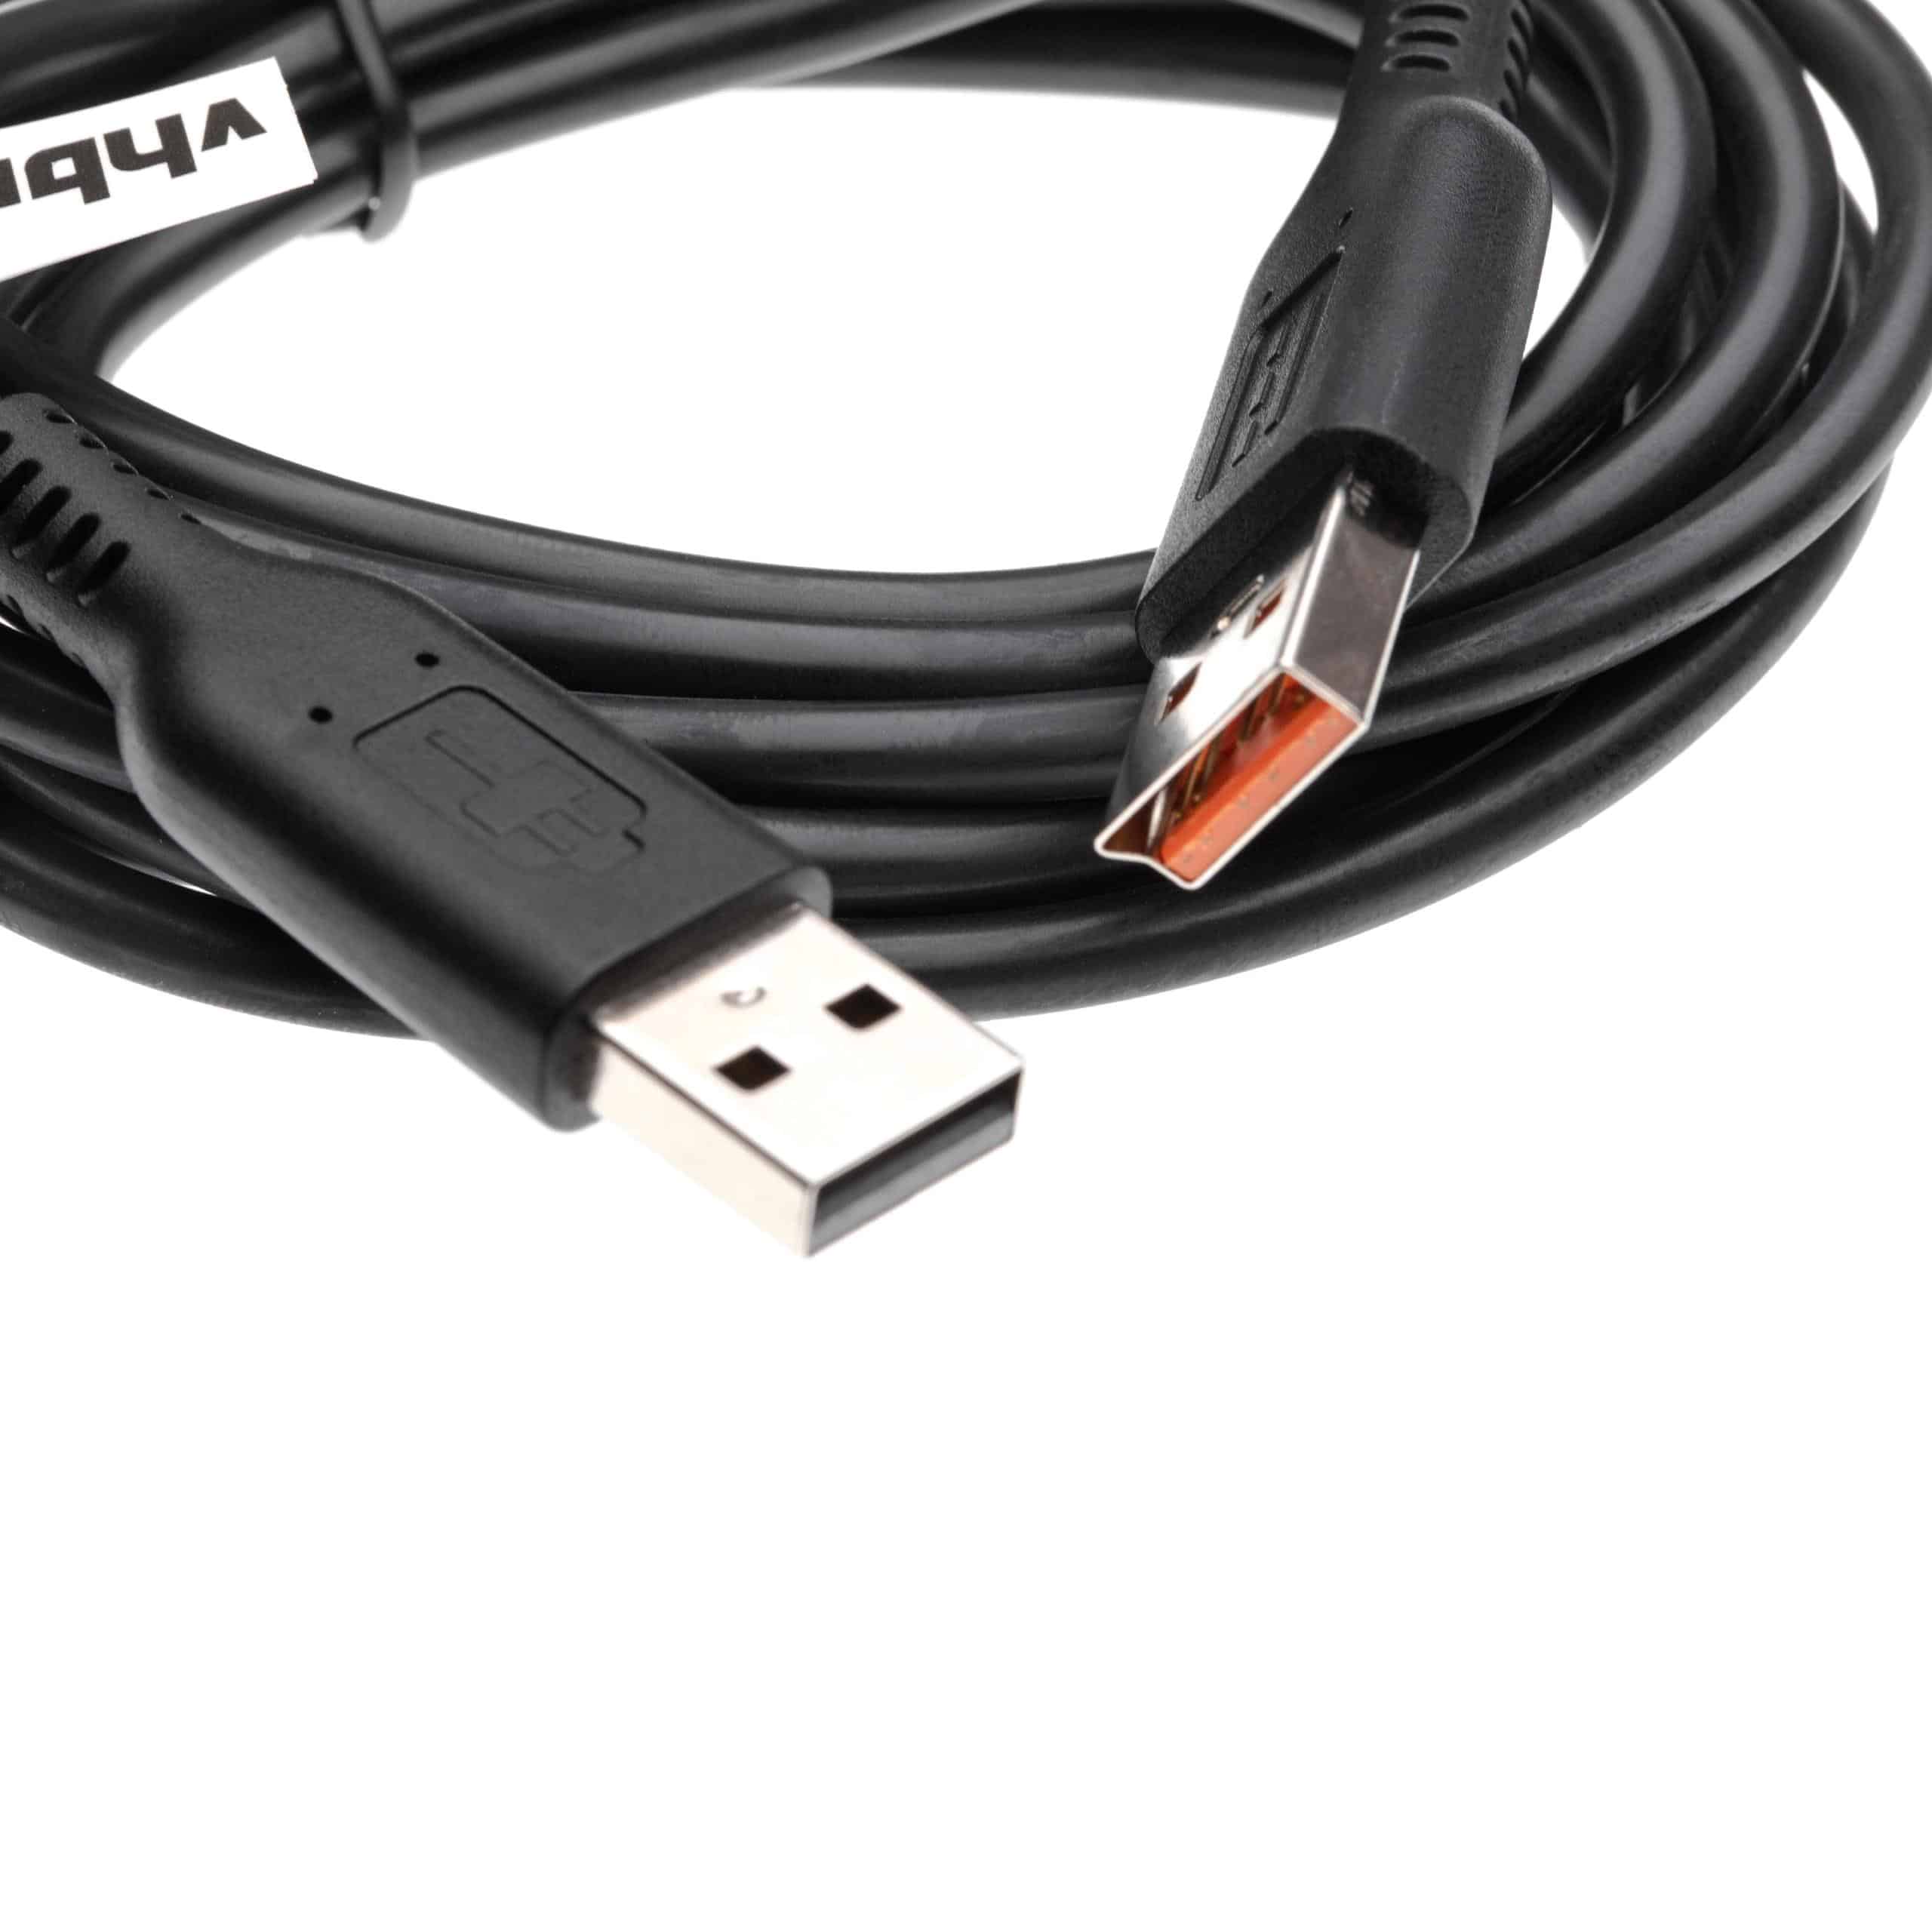 Cable de datos USB reemplaza Lenovo 5L60J33144, 5L60J33145 para tablet Lenovo - cable de carga 2en1, 200cm